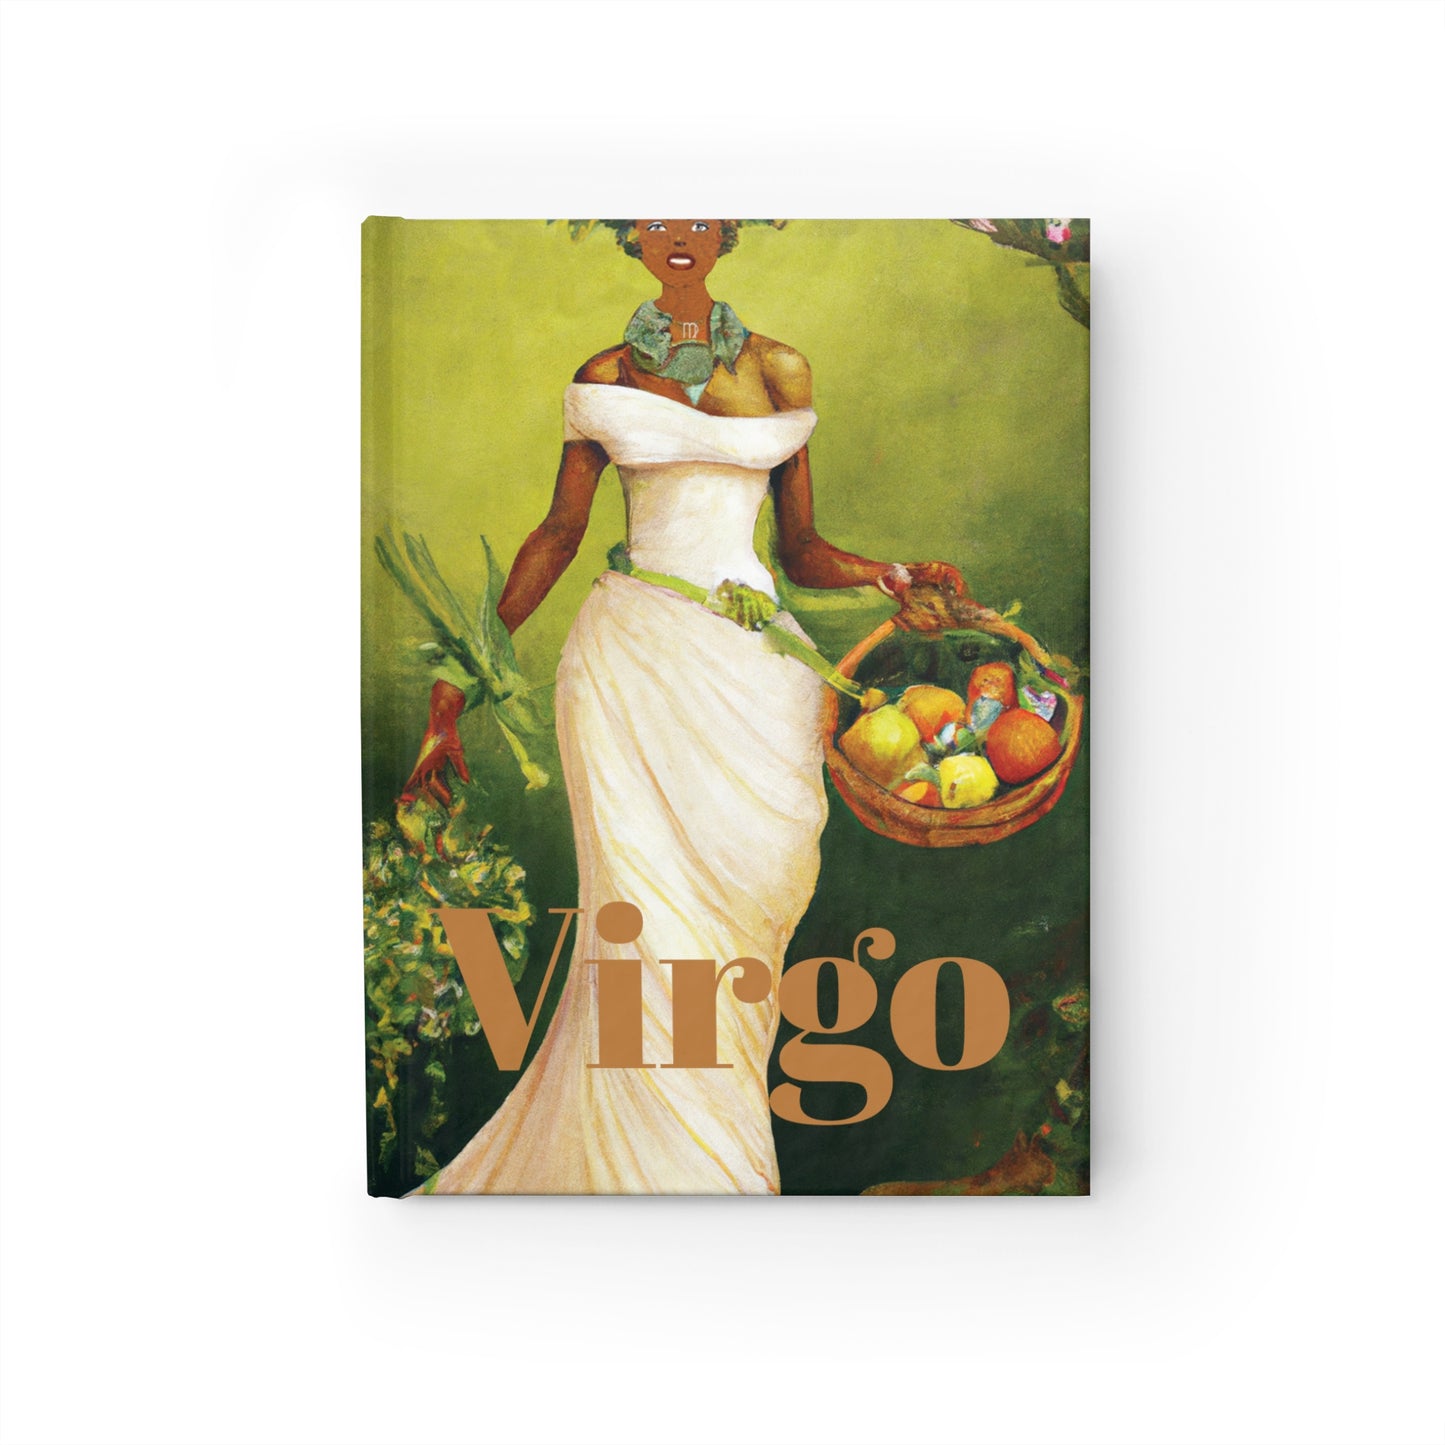 Virtuous Virgo Hardcover Journal - Ruled Line